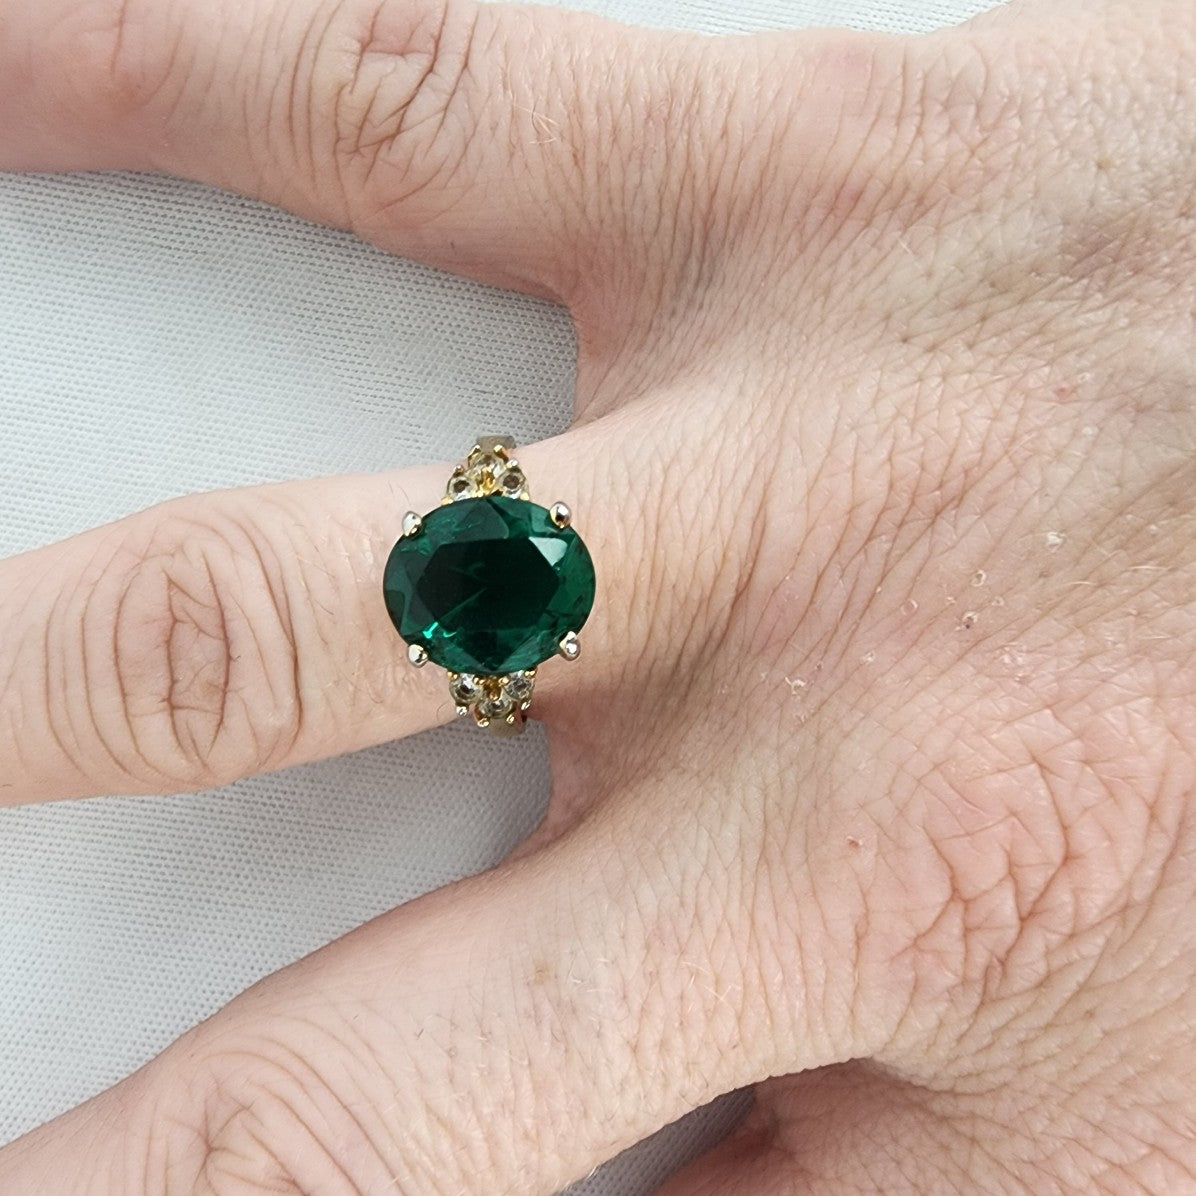 Vintage Gold Tone Green Gemstone Ring Size 8